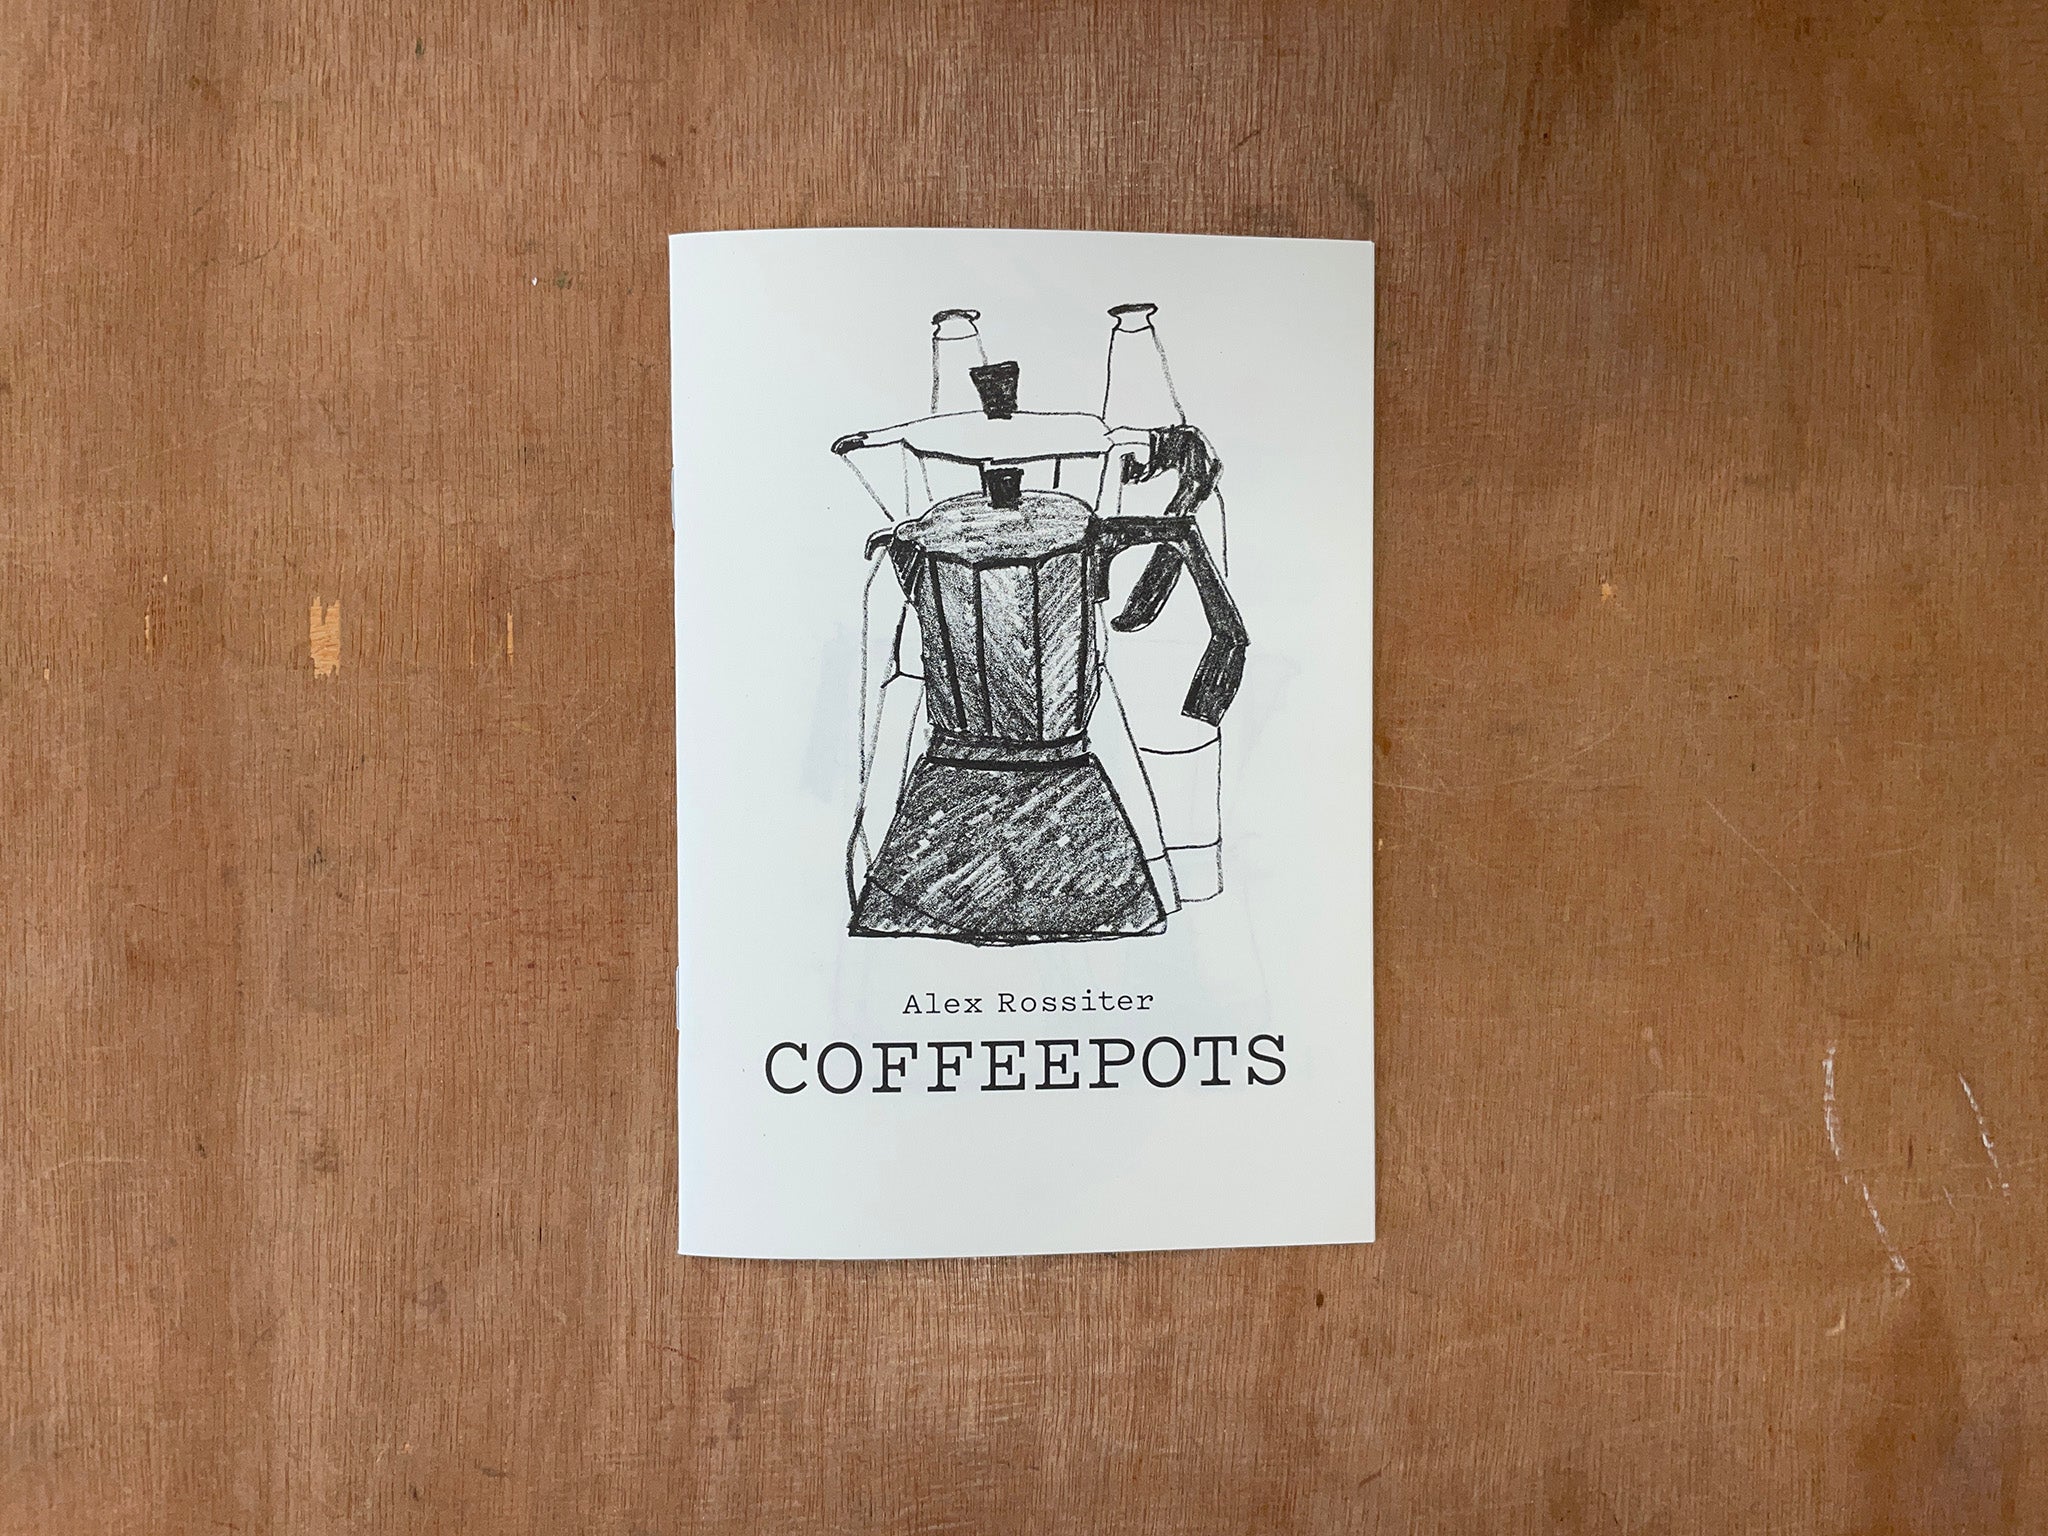 COFFEEPOTS by Alex Rossiter